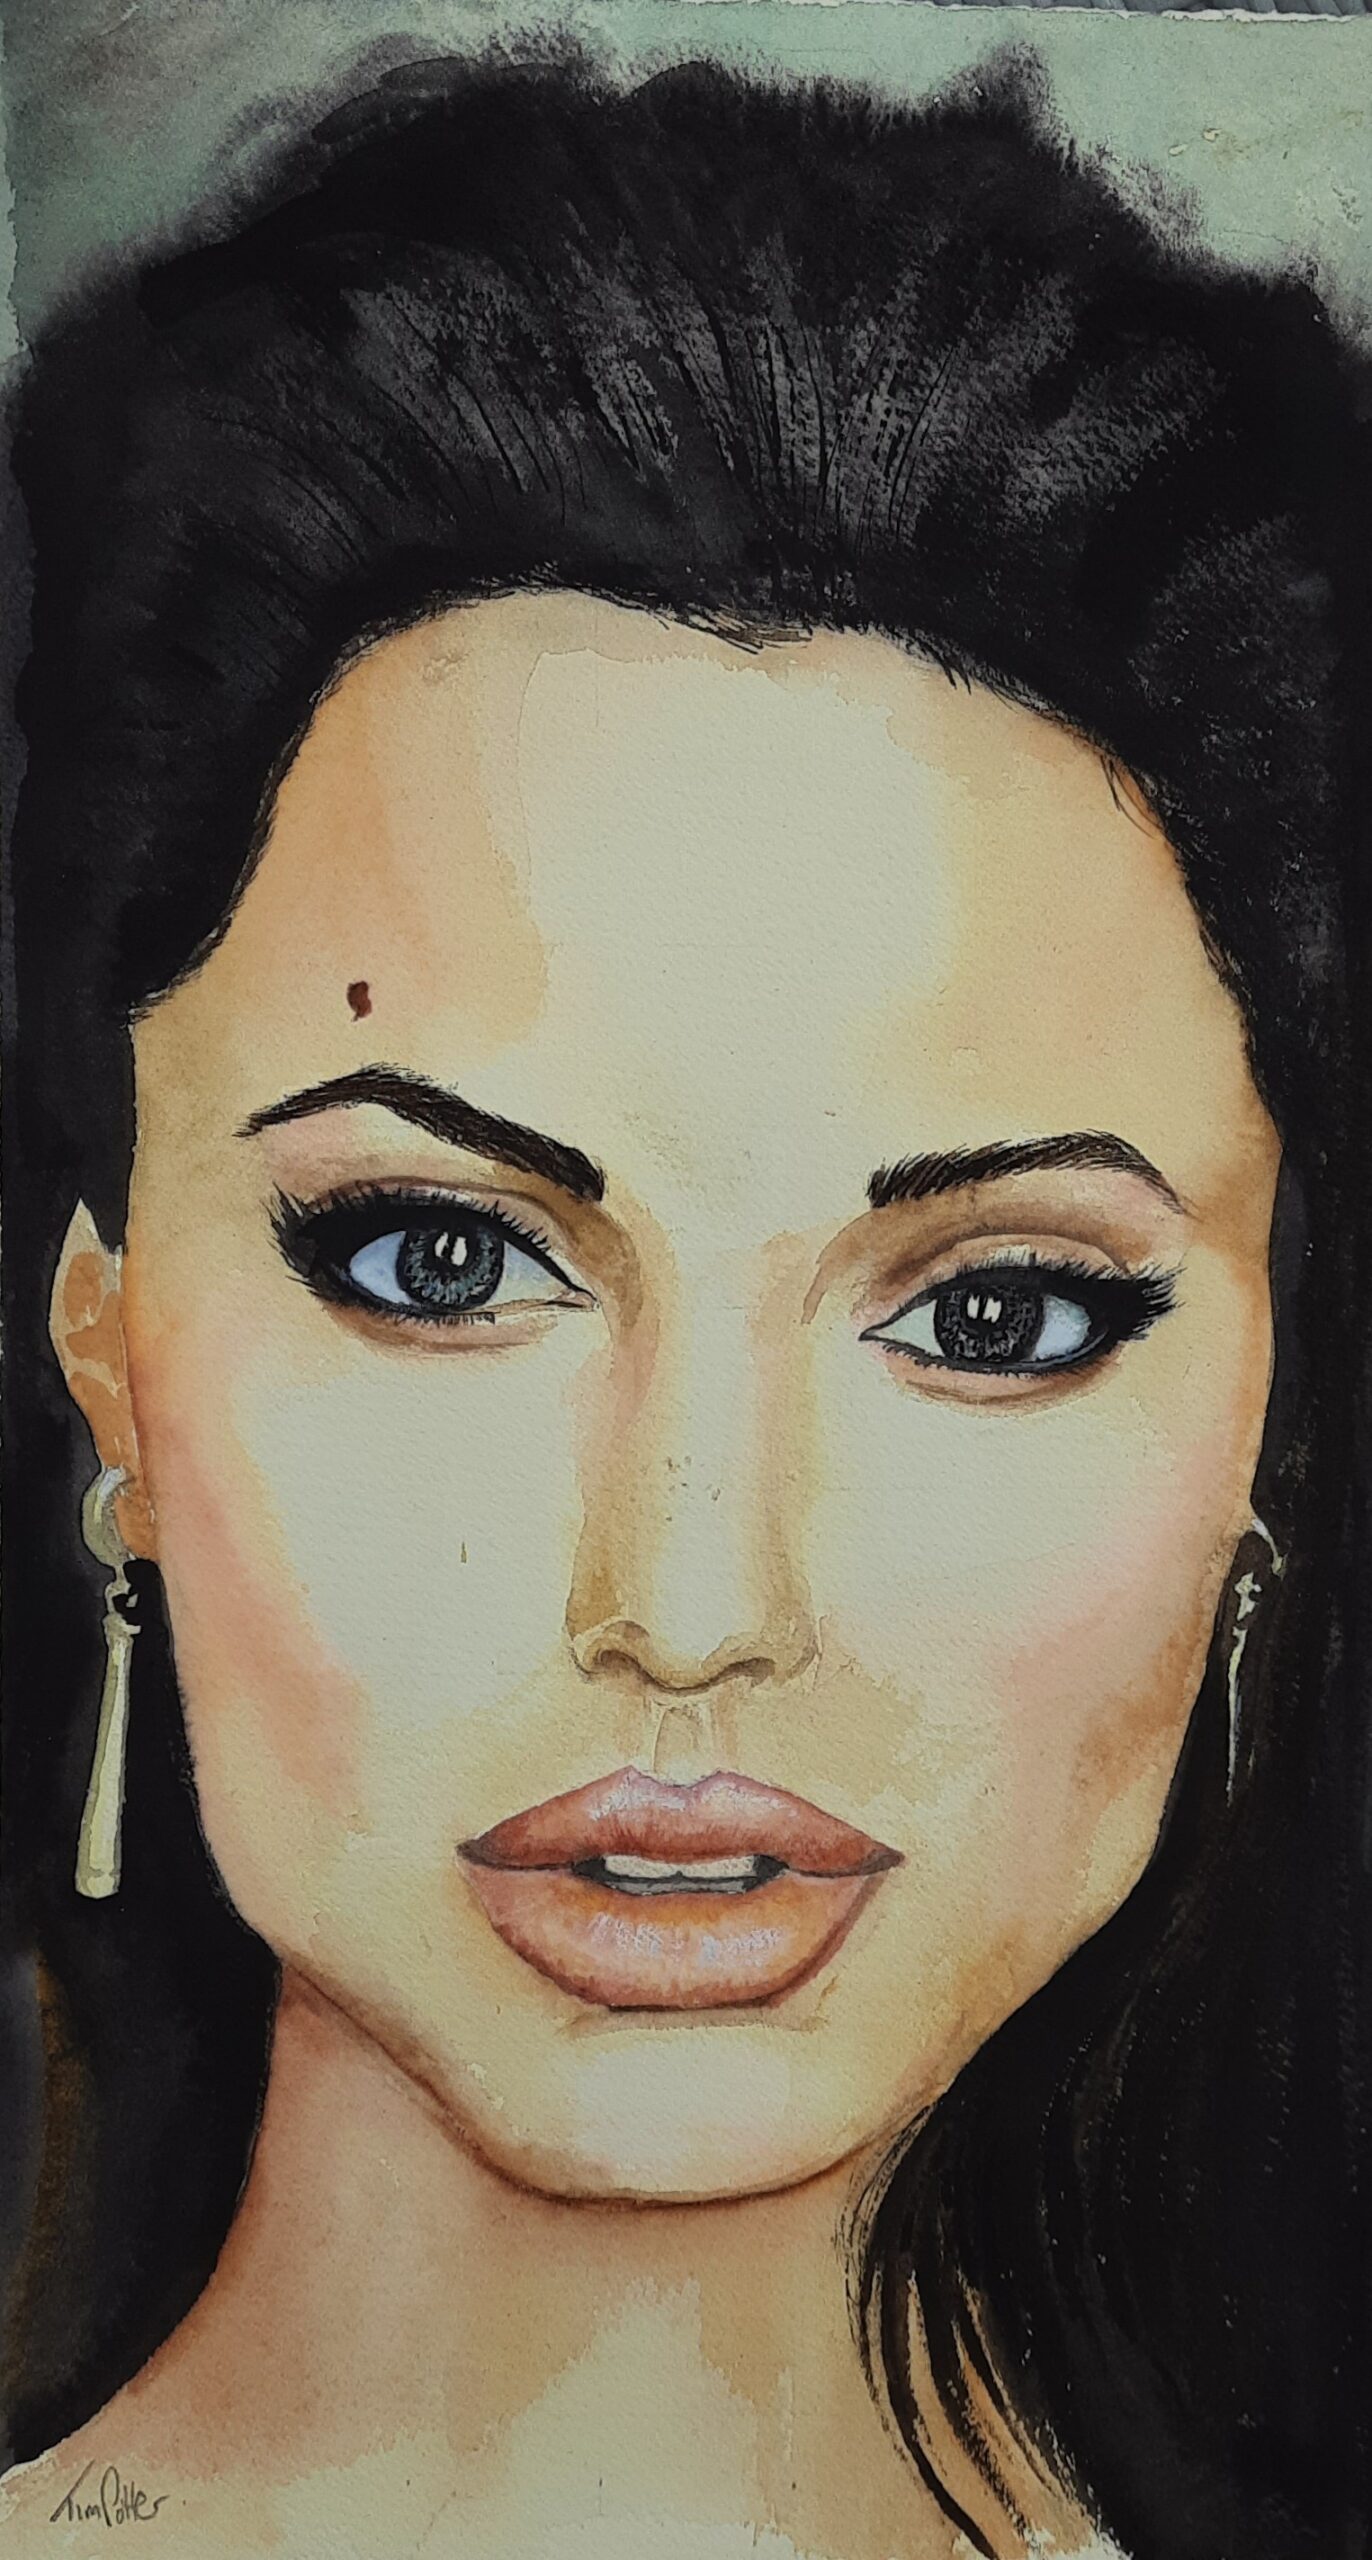 Acrylic portrait of Angelina Jolie